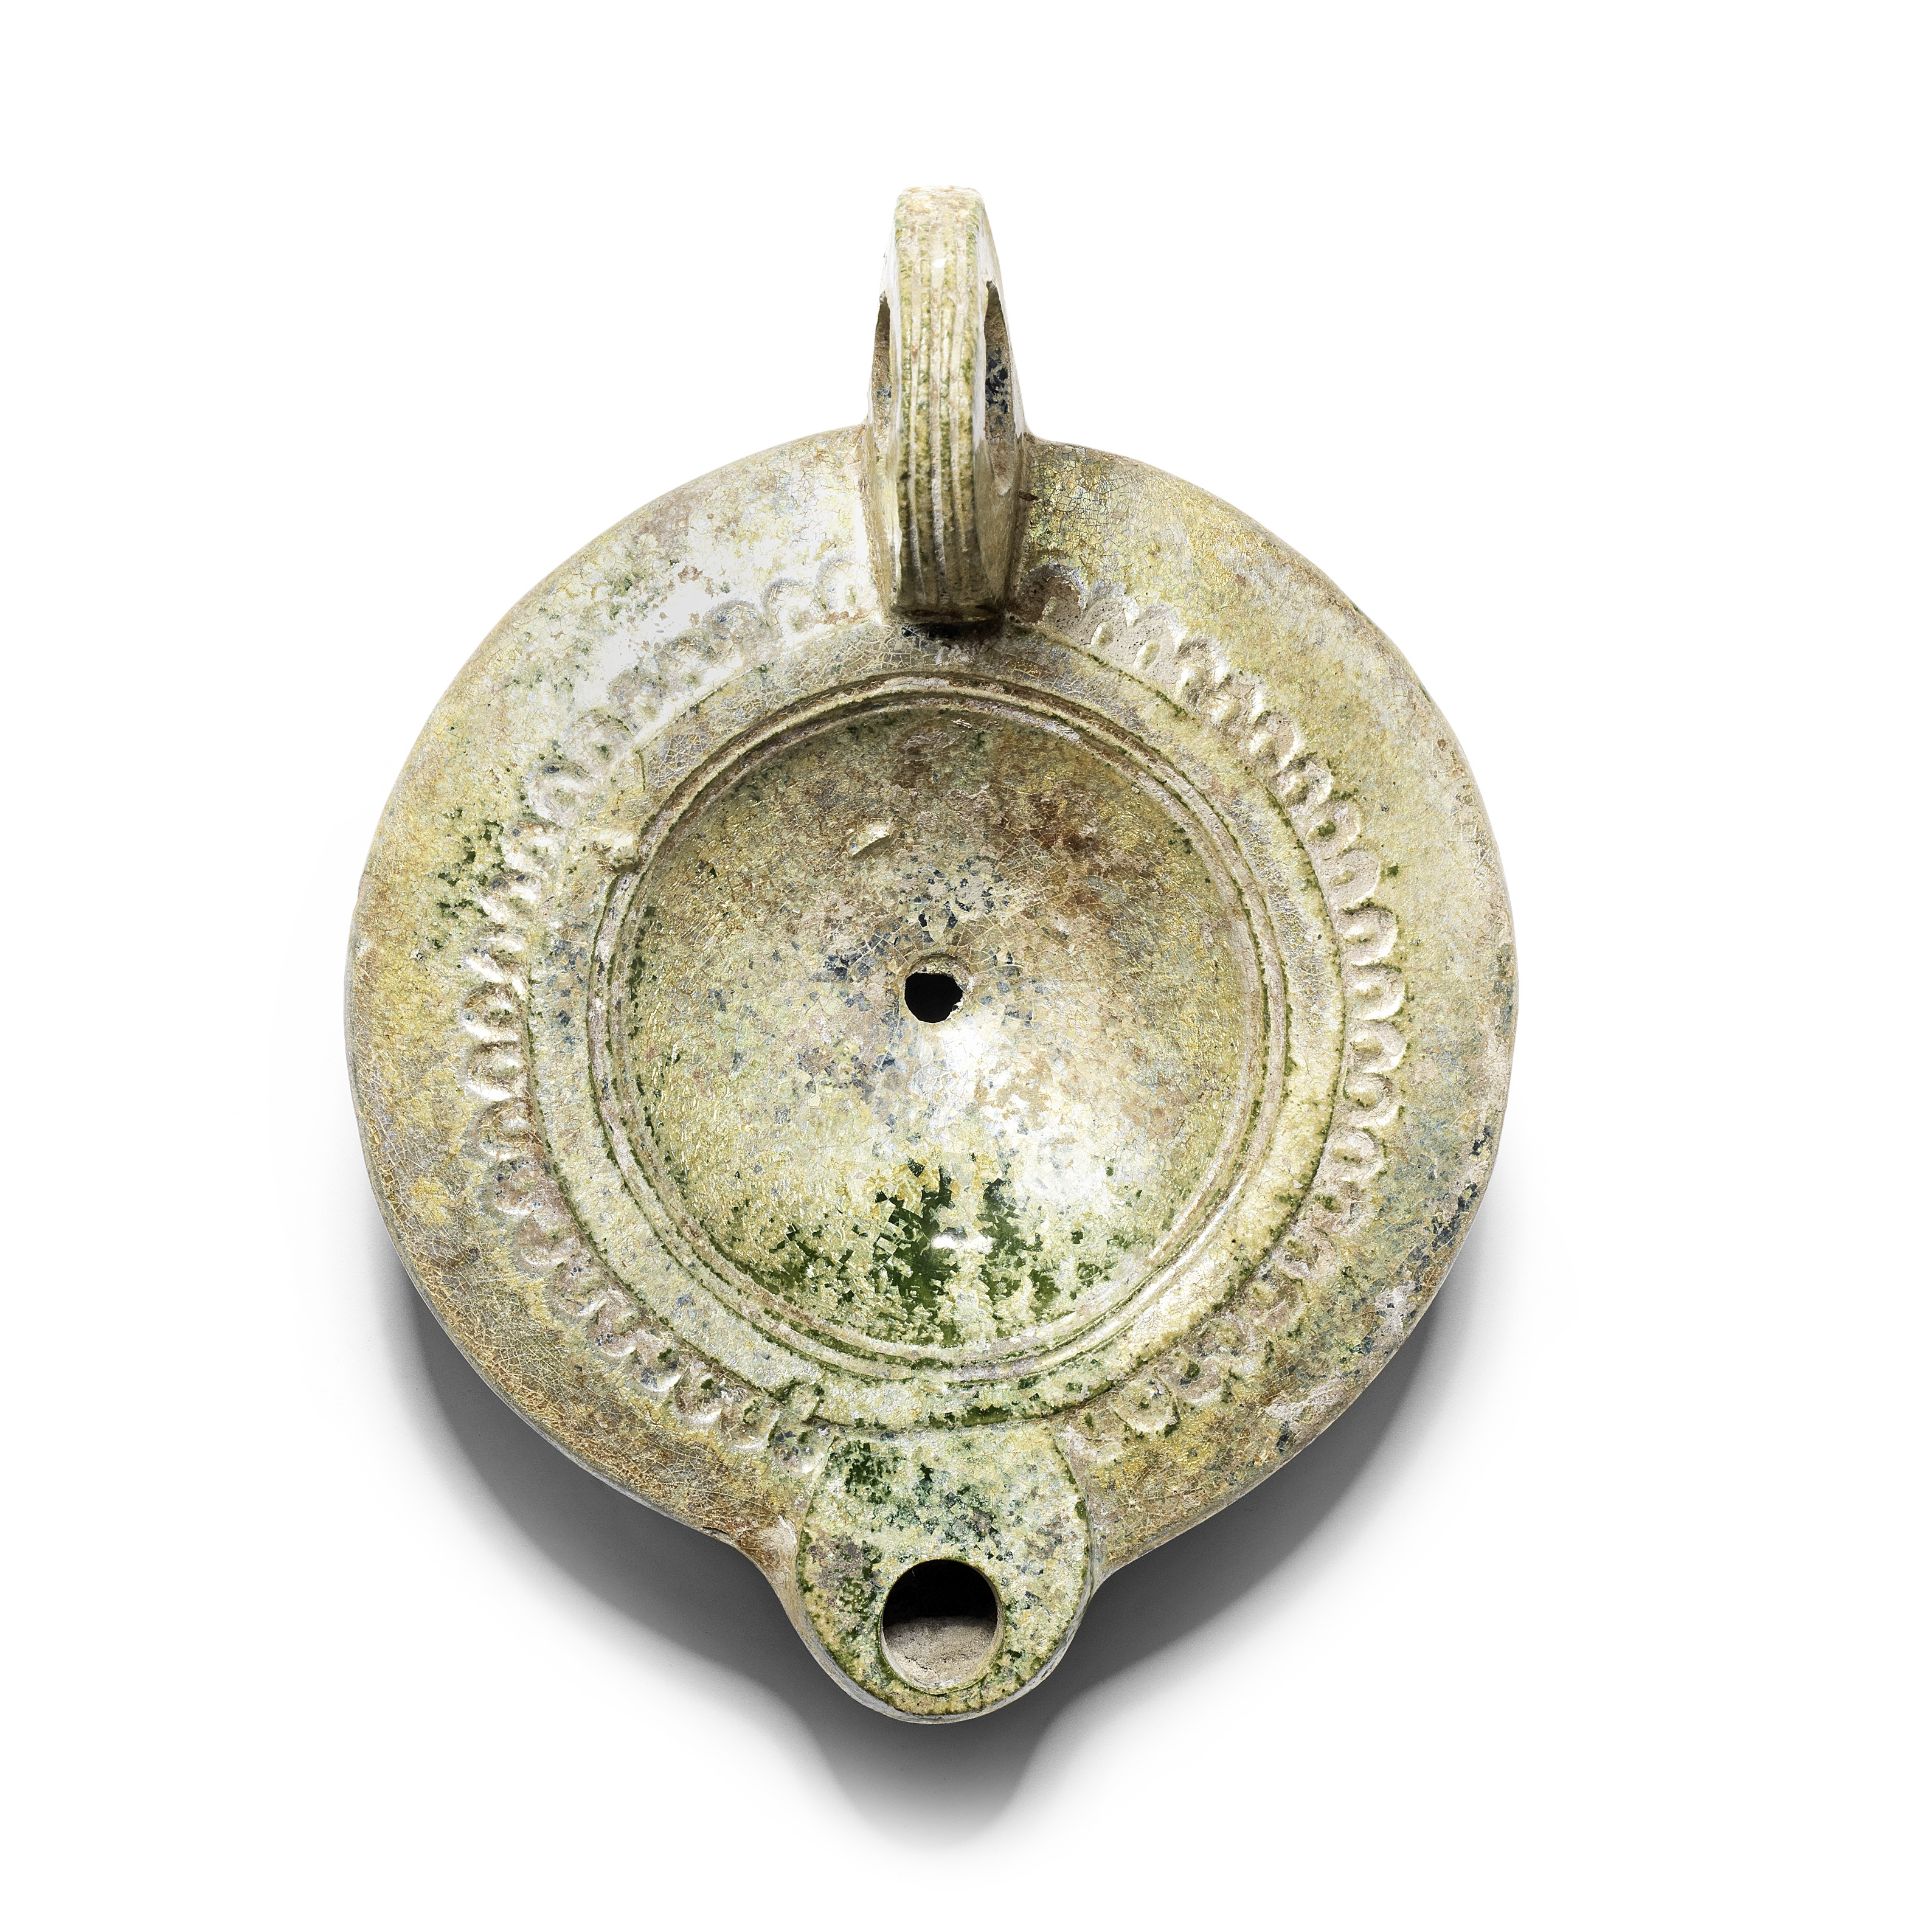 A large Roman lead-glazed pottery oil lamp